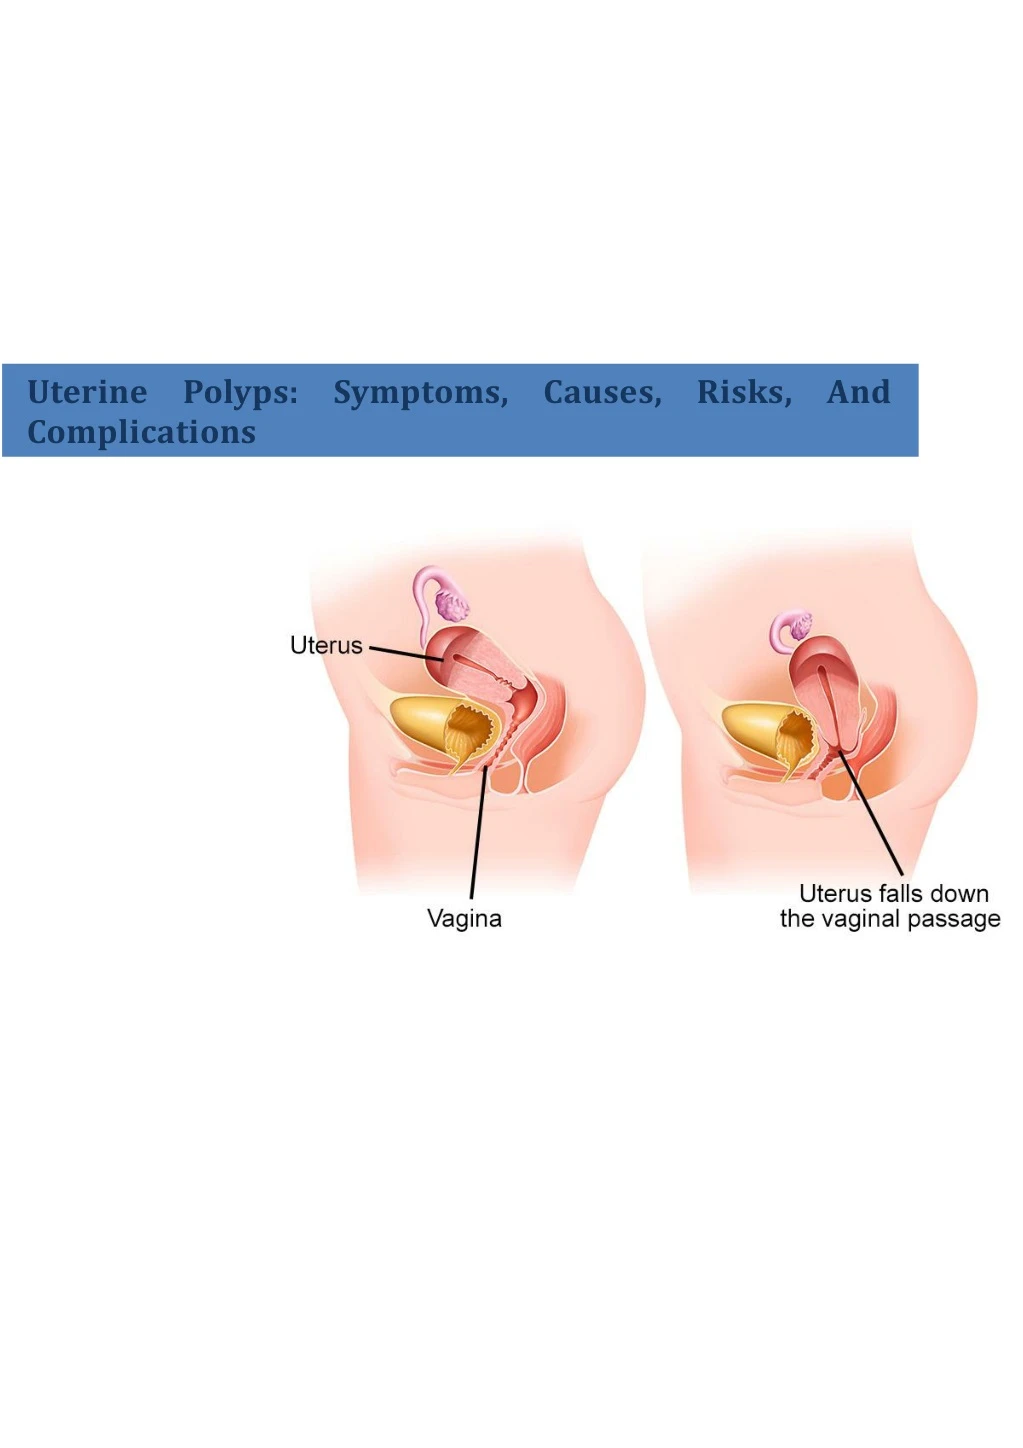 uterine polyps symptoms causes risks